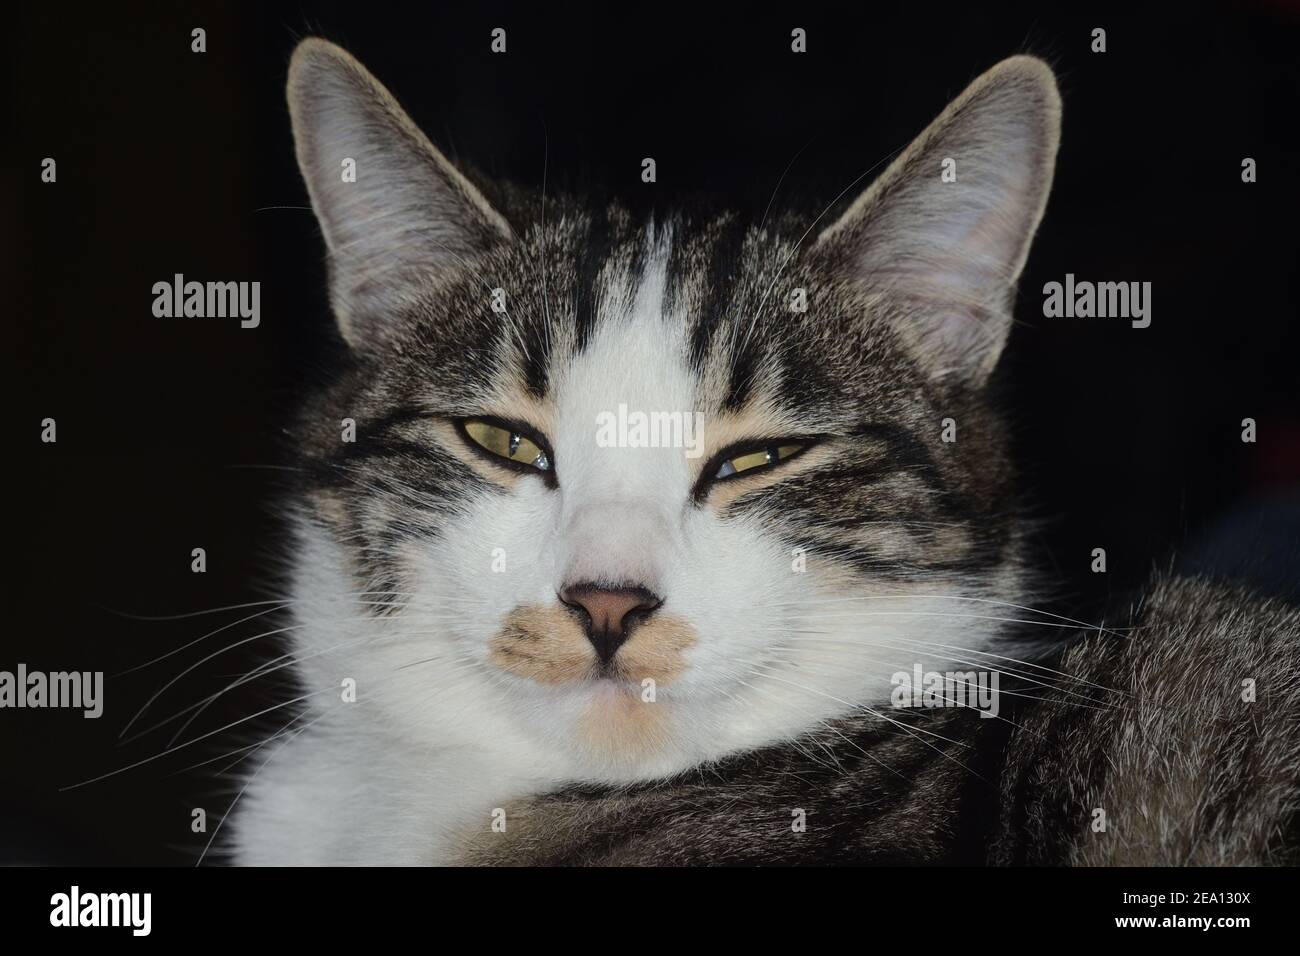 closeup portrait of a striped tabby cat Stock Photo